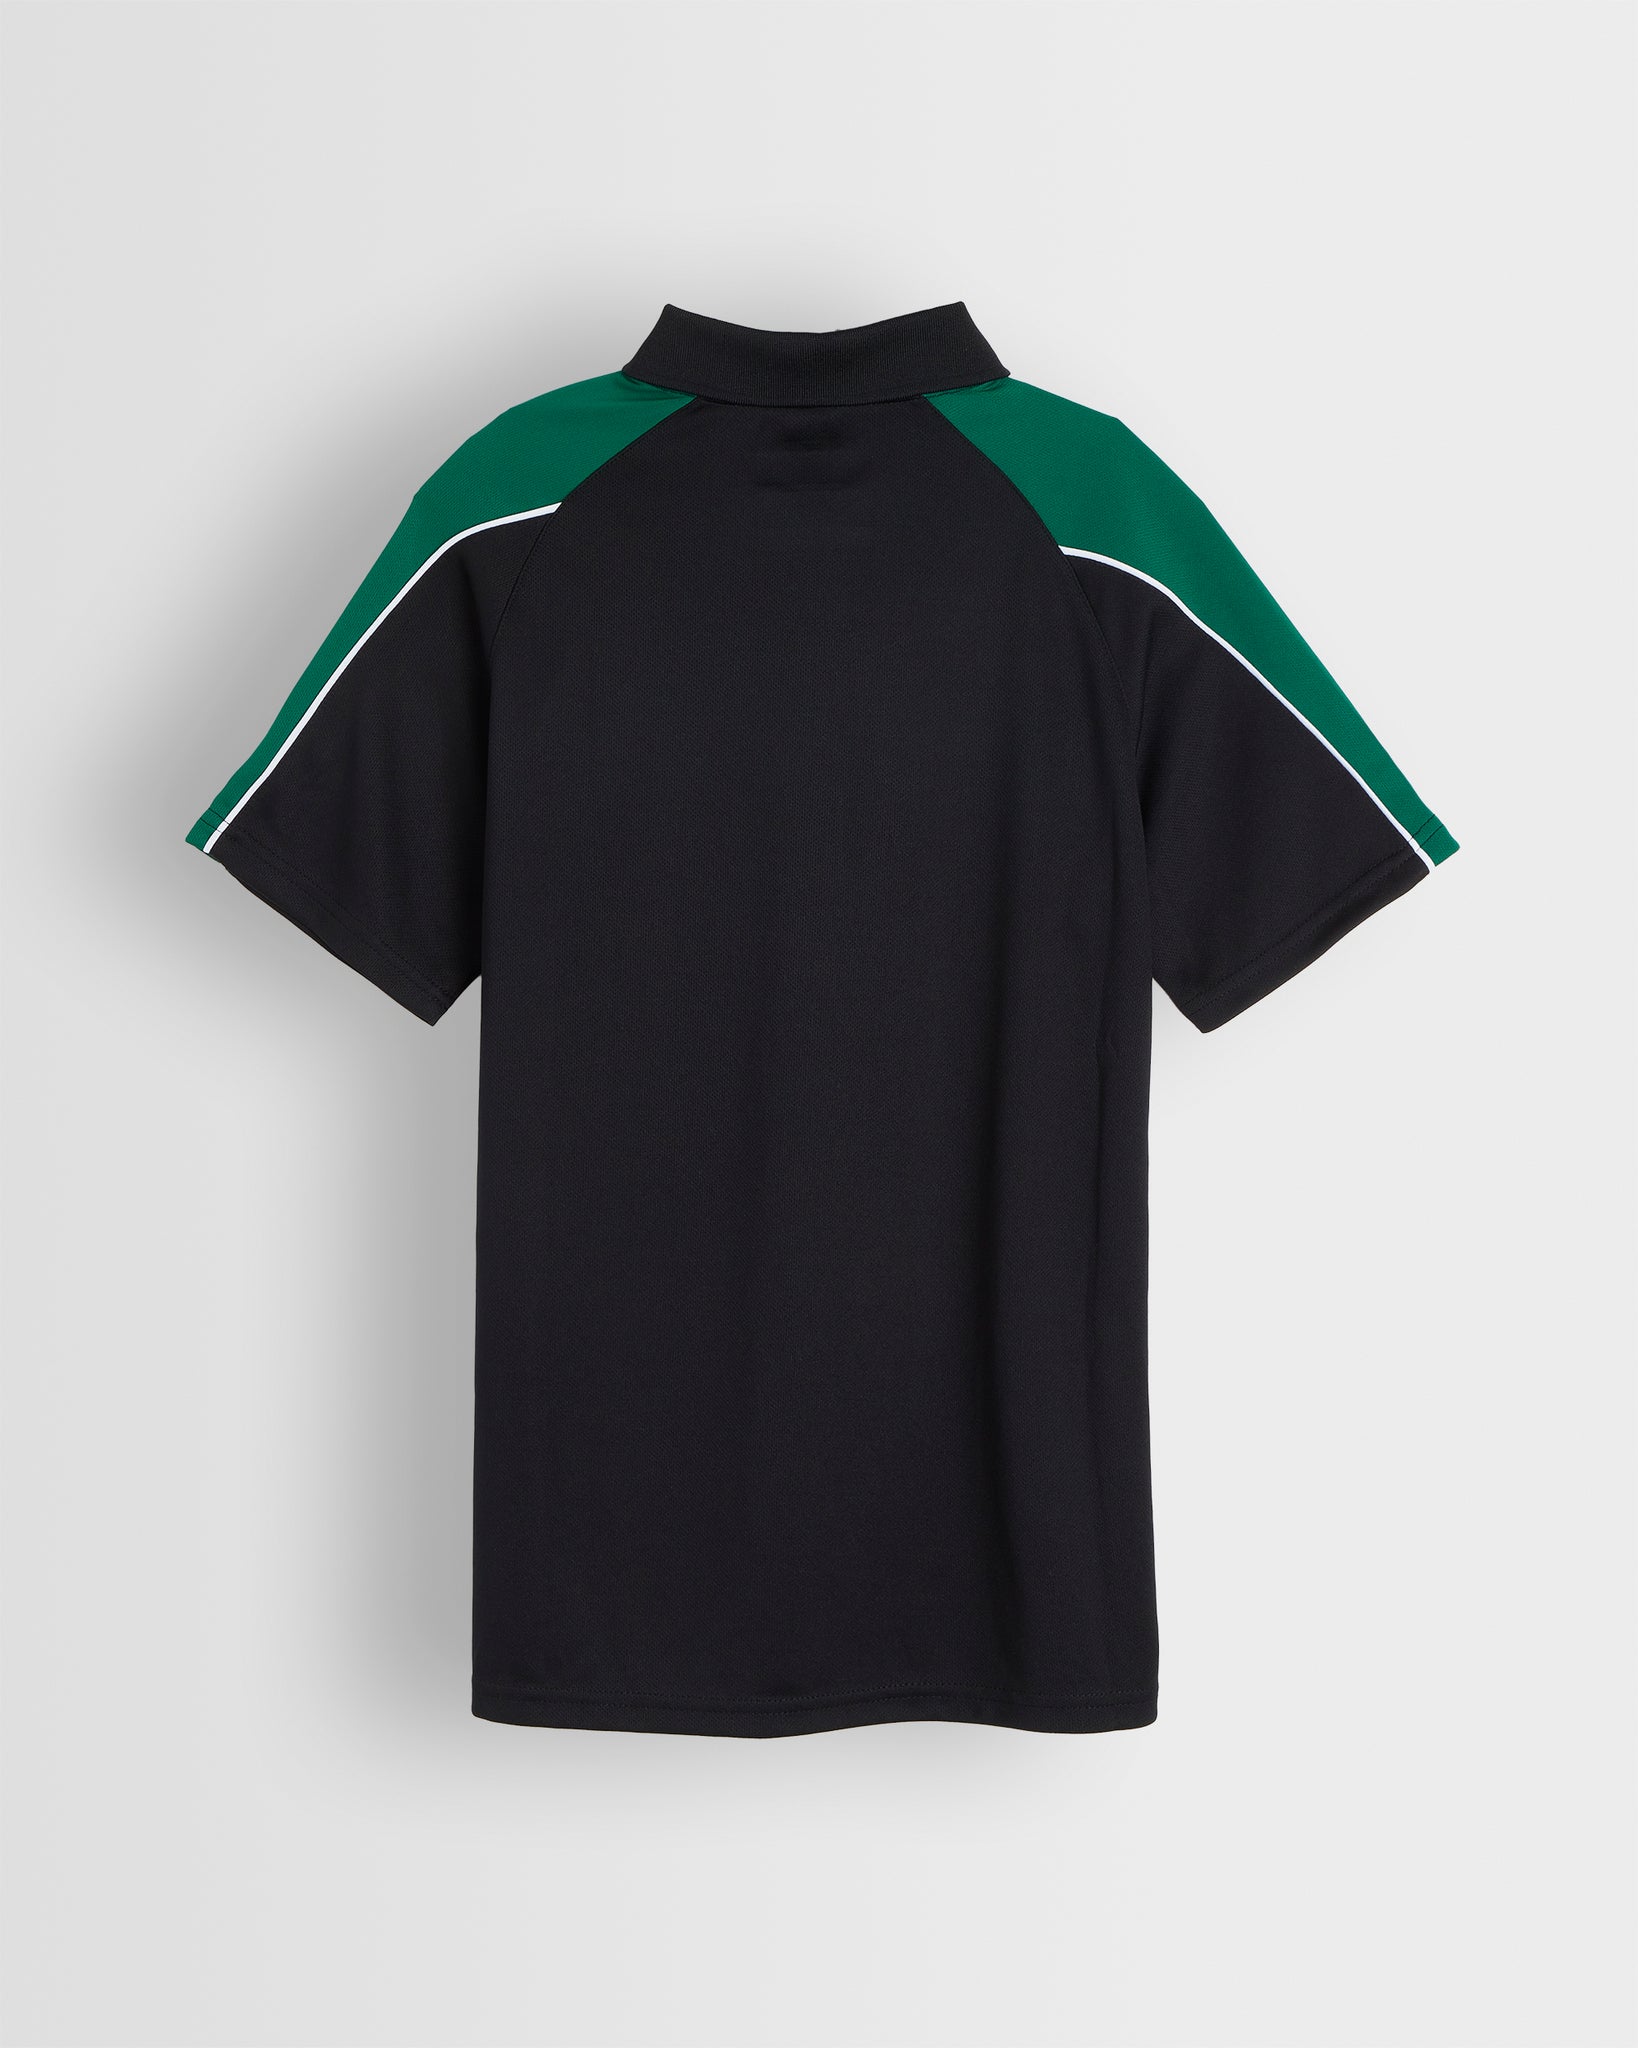 Unisex Black/Green Polo Shirt – Direct Clothing